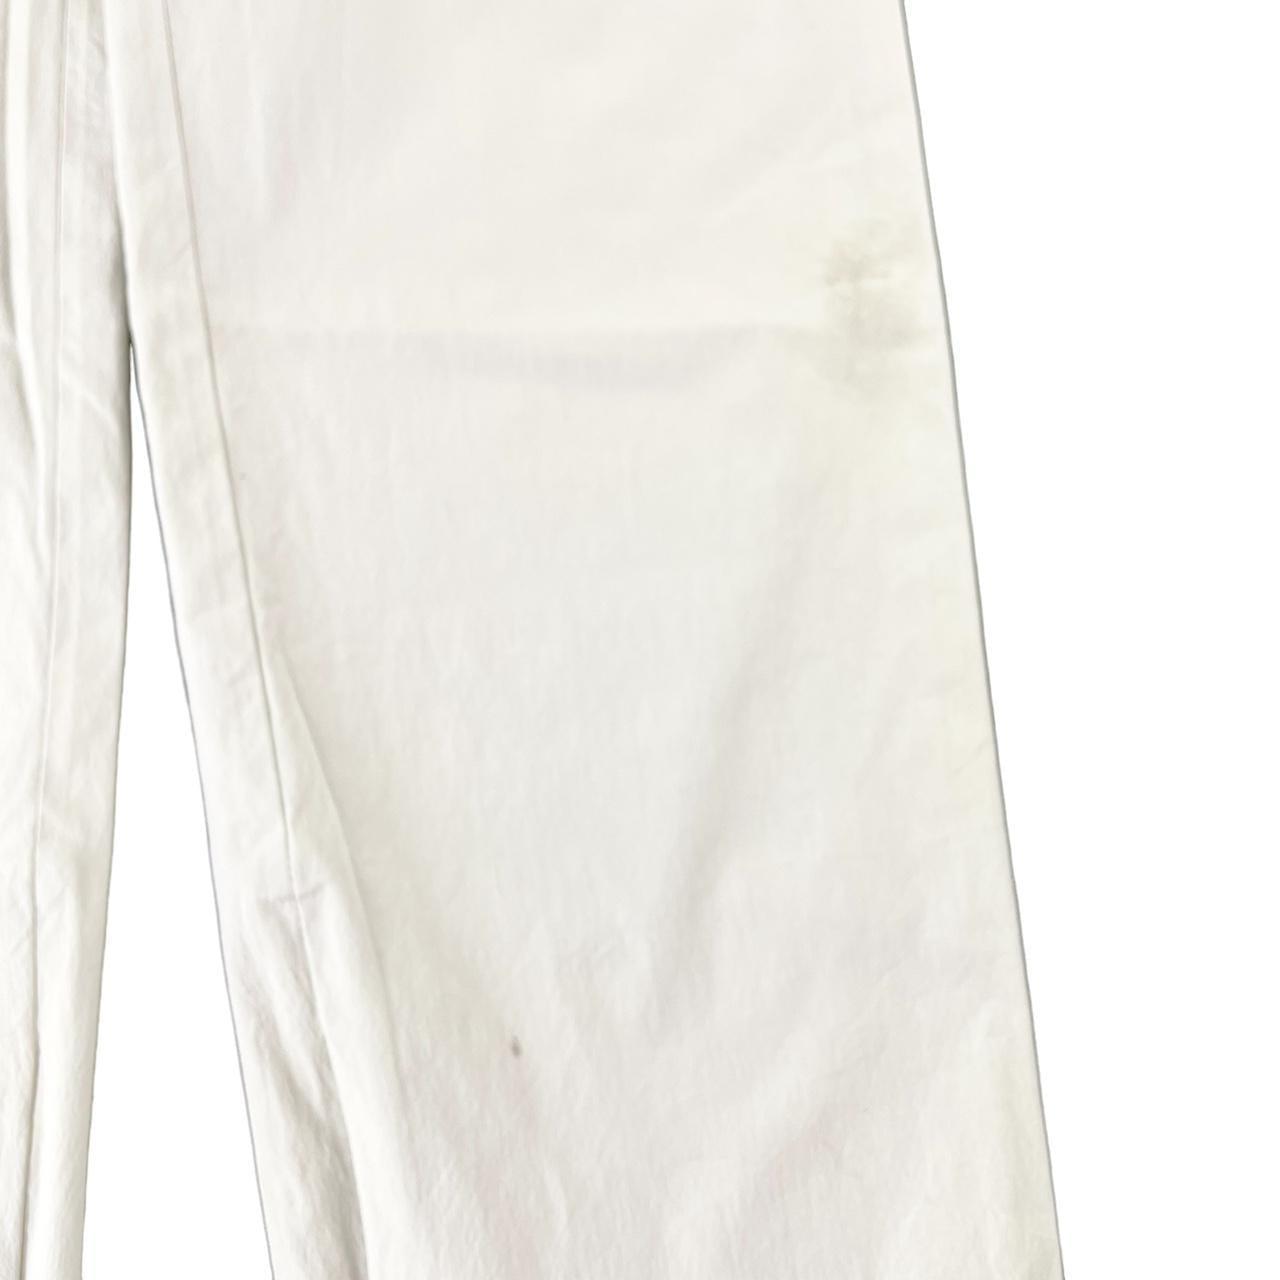 Vintage Prada sport trousers W35 - Known Source